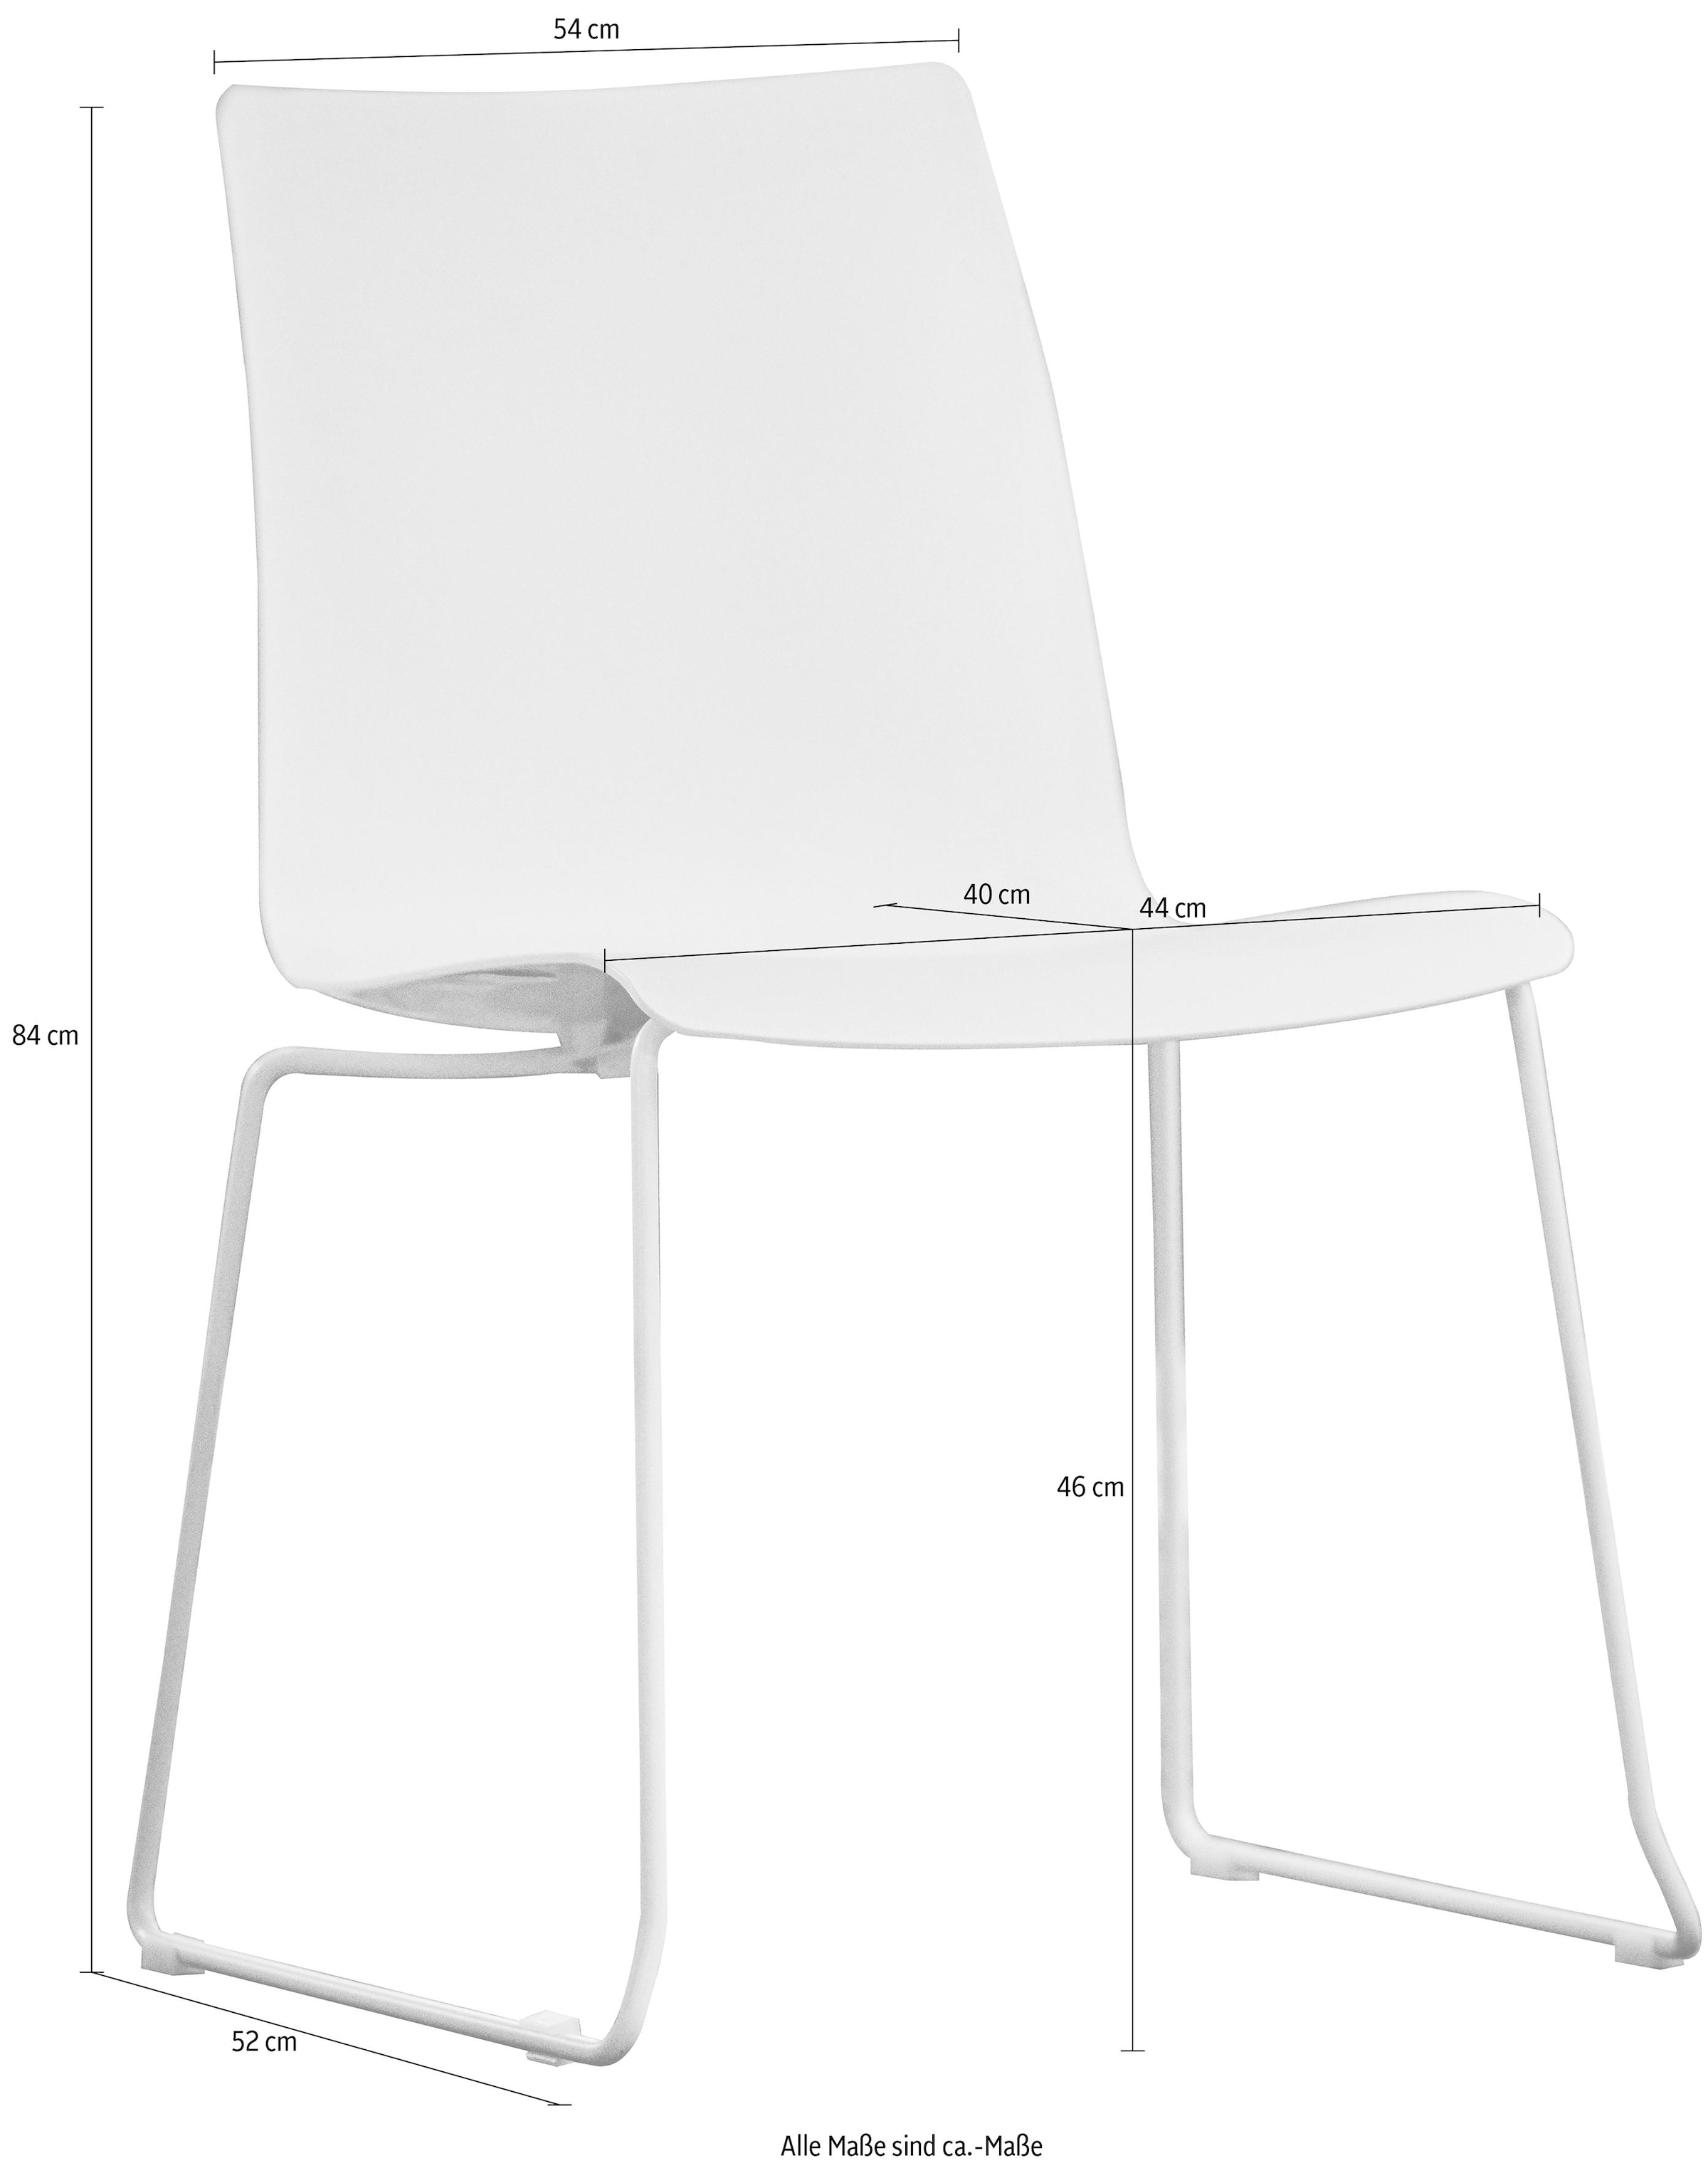 jankurtz Stuhl »slide«, Sitzschale aus Kunsstoff, stapelbar, in 3 Farben